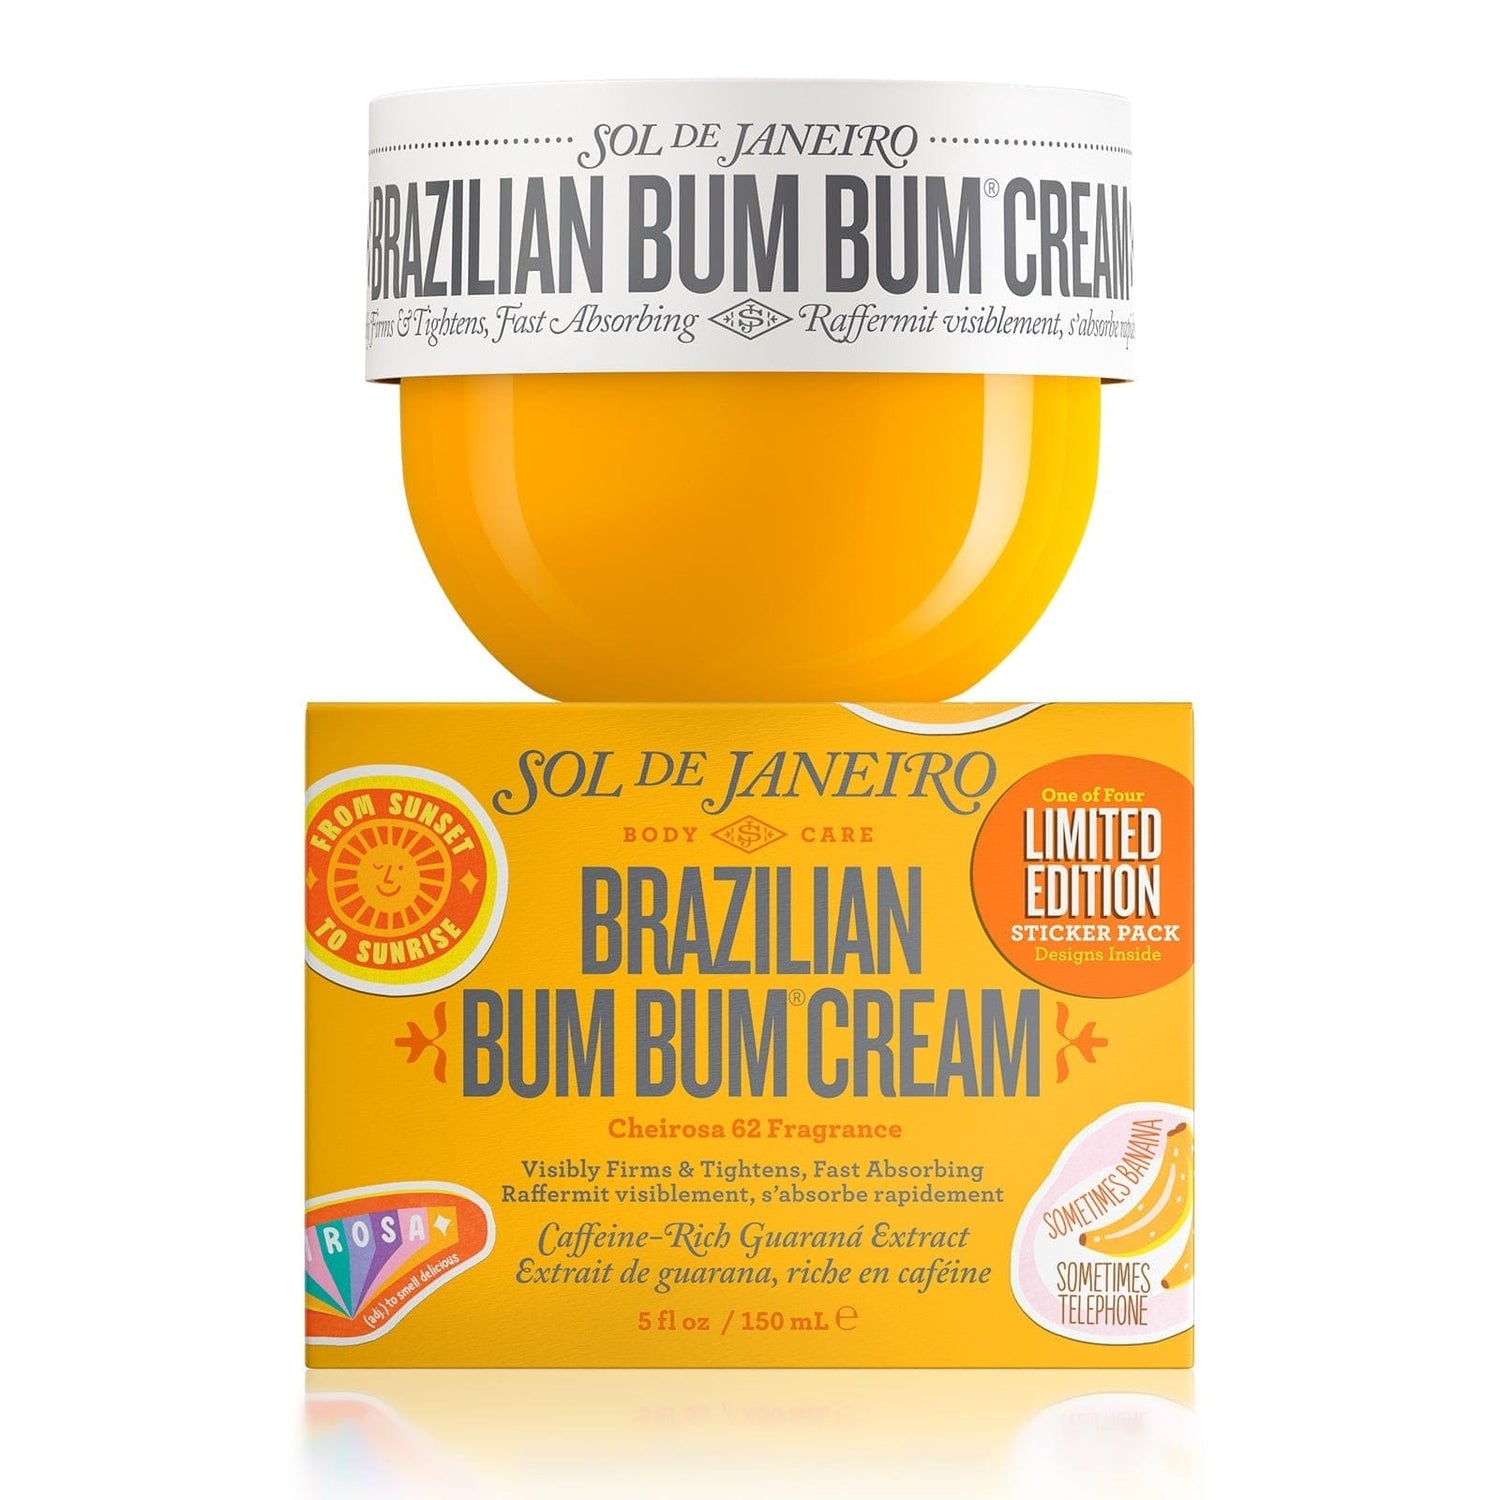 Brazilian bum bum cream with limited edition sticker pack 150ml